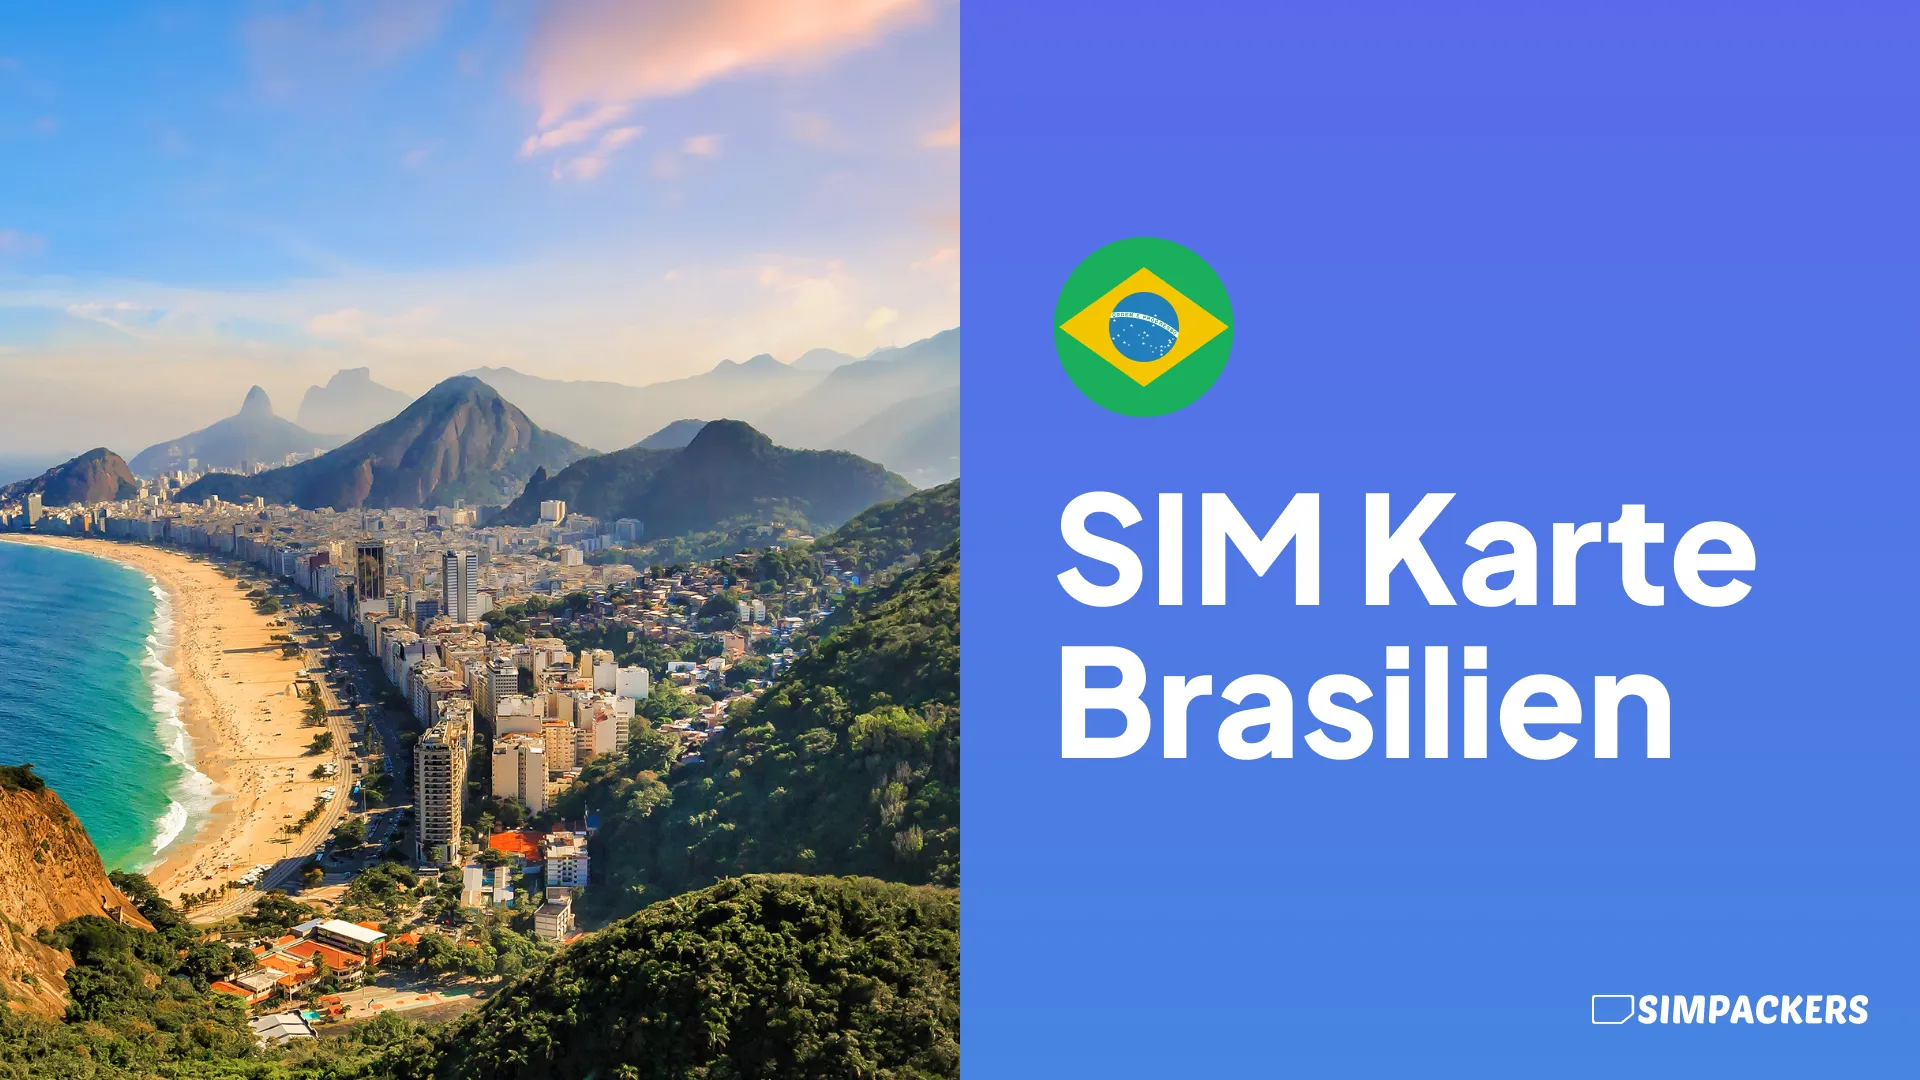 DE/FEATURED_IMAGES/sim-karte-brasilien.webp